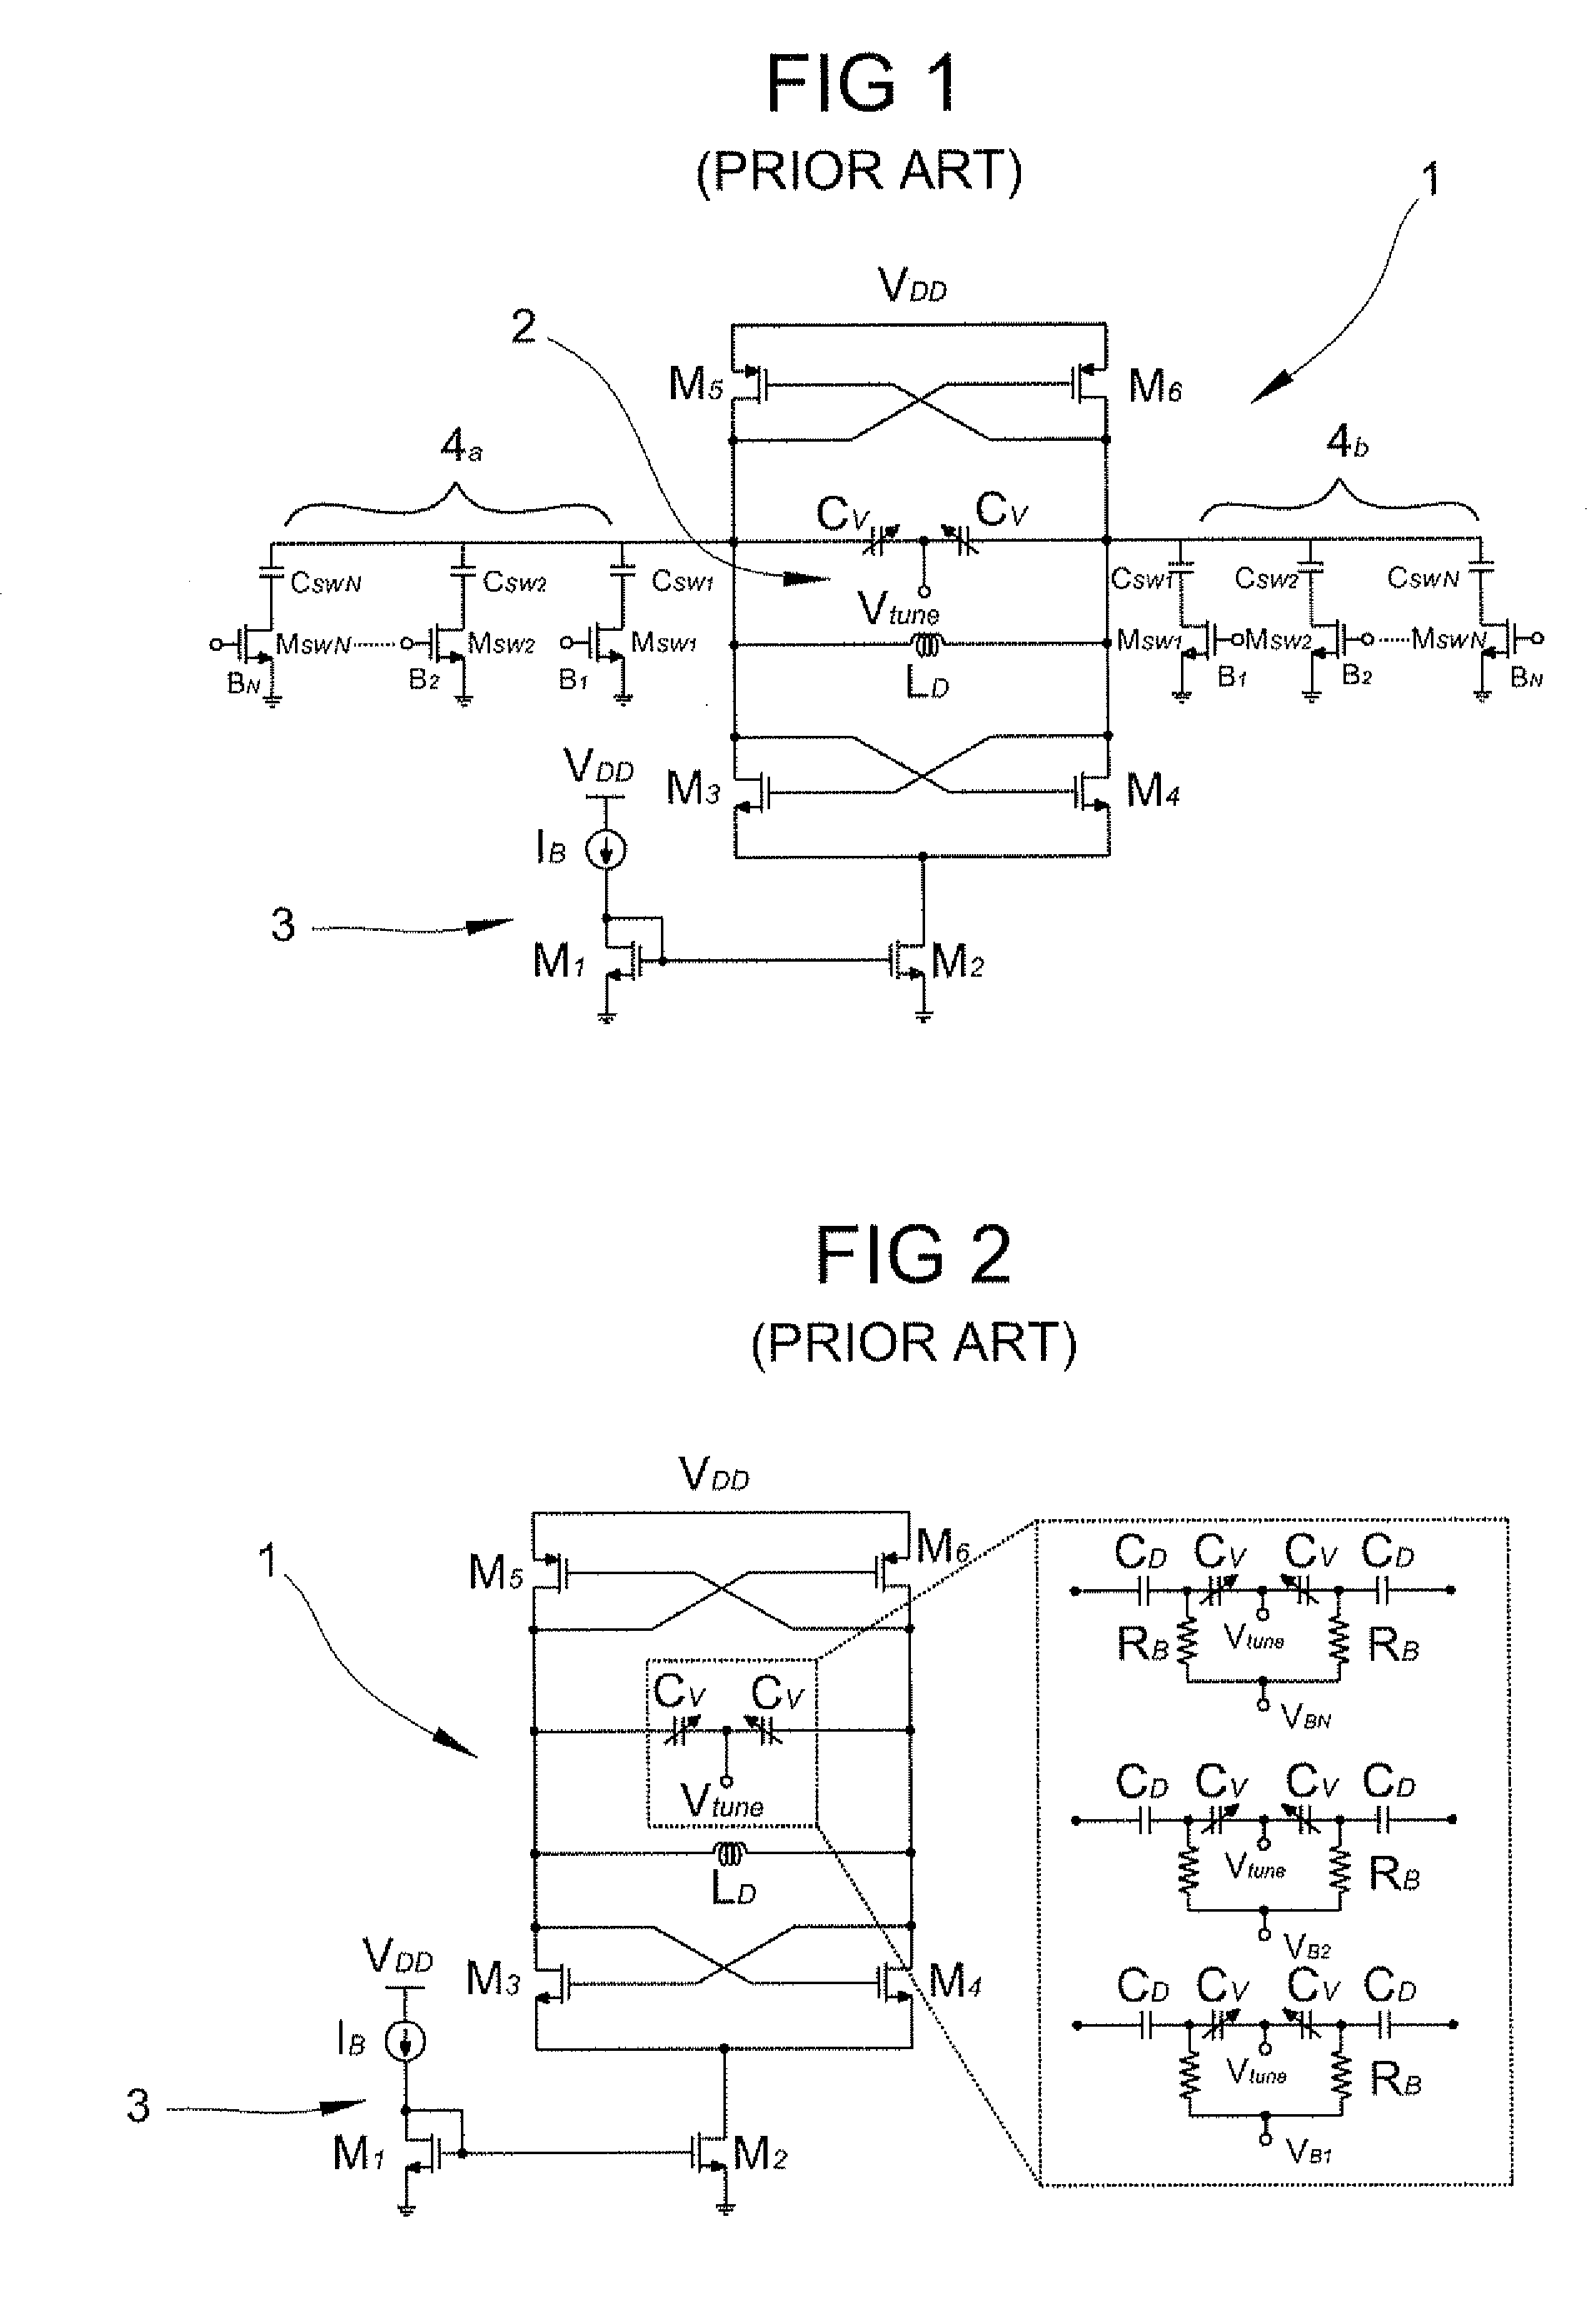 Circuit arrangement of a voltage controlled oscillator